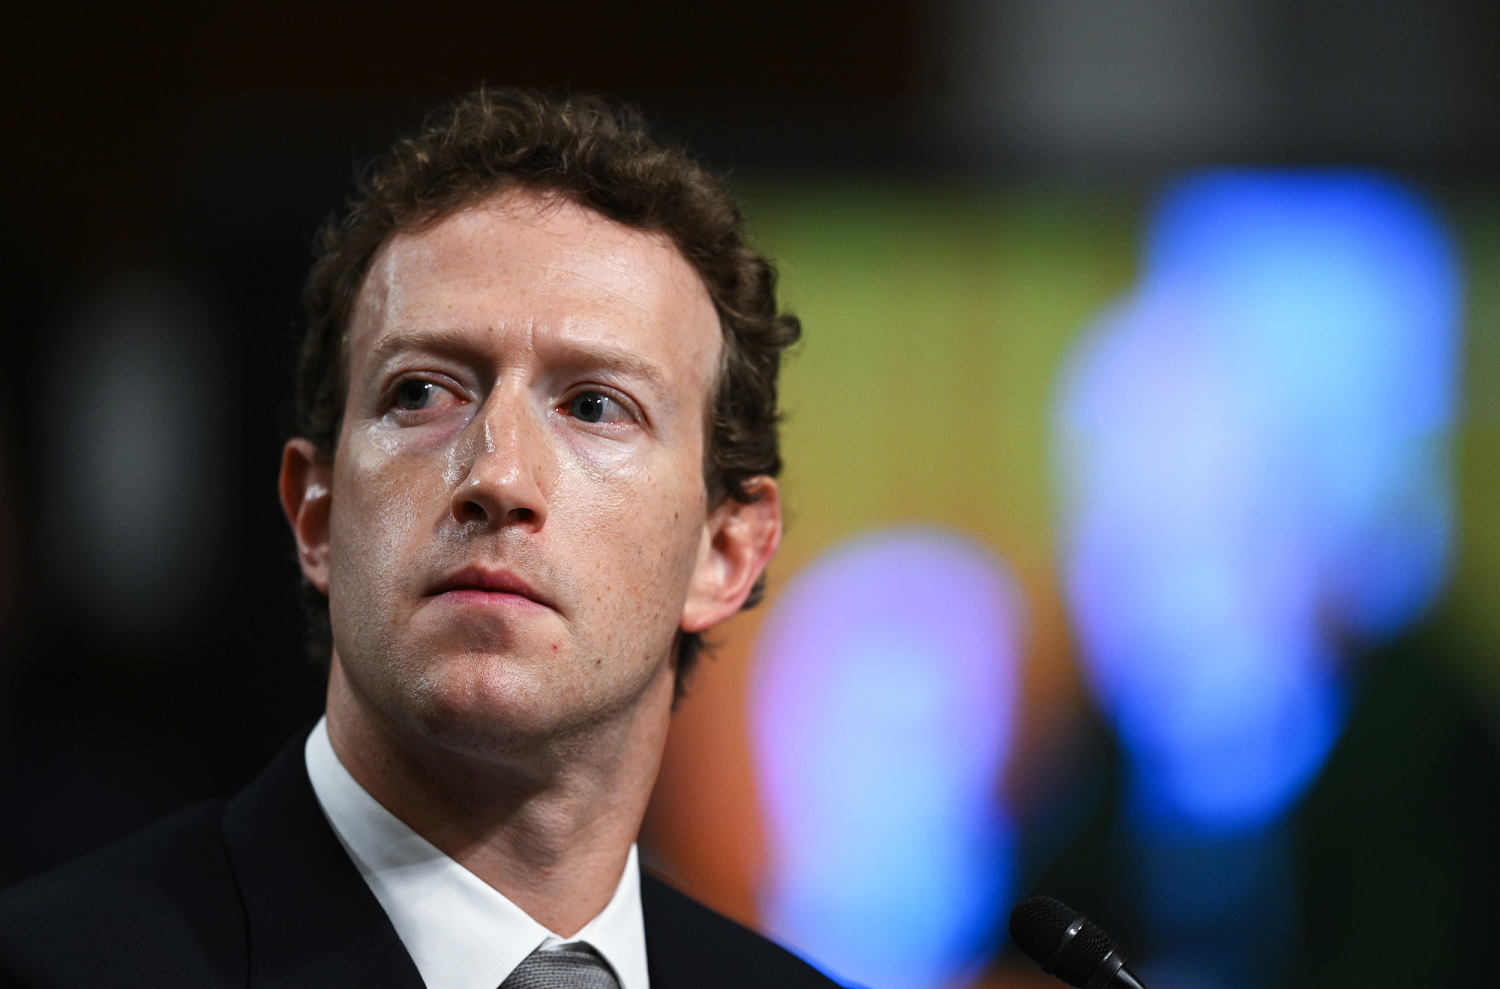 Meta stock plummets after Mark Zuckerberg touts money-losing projects